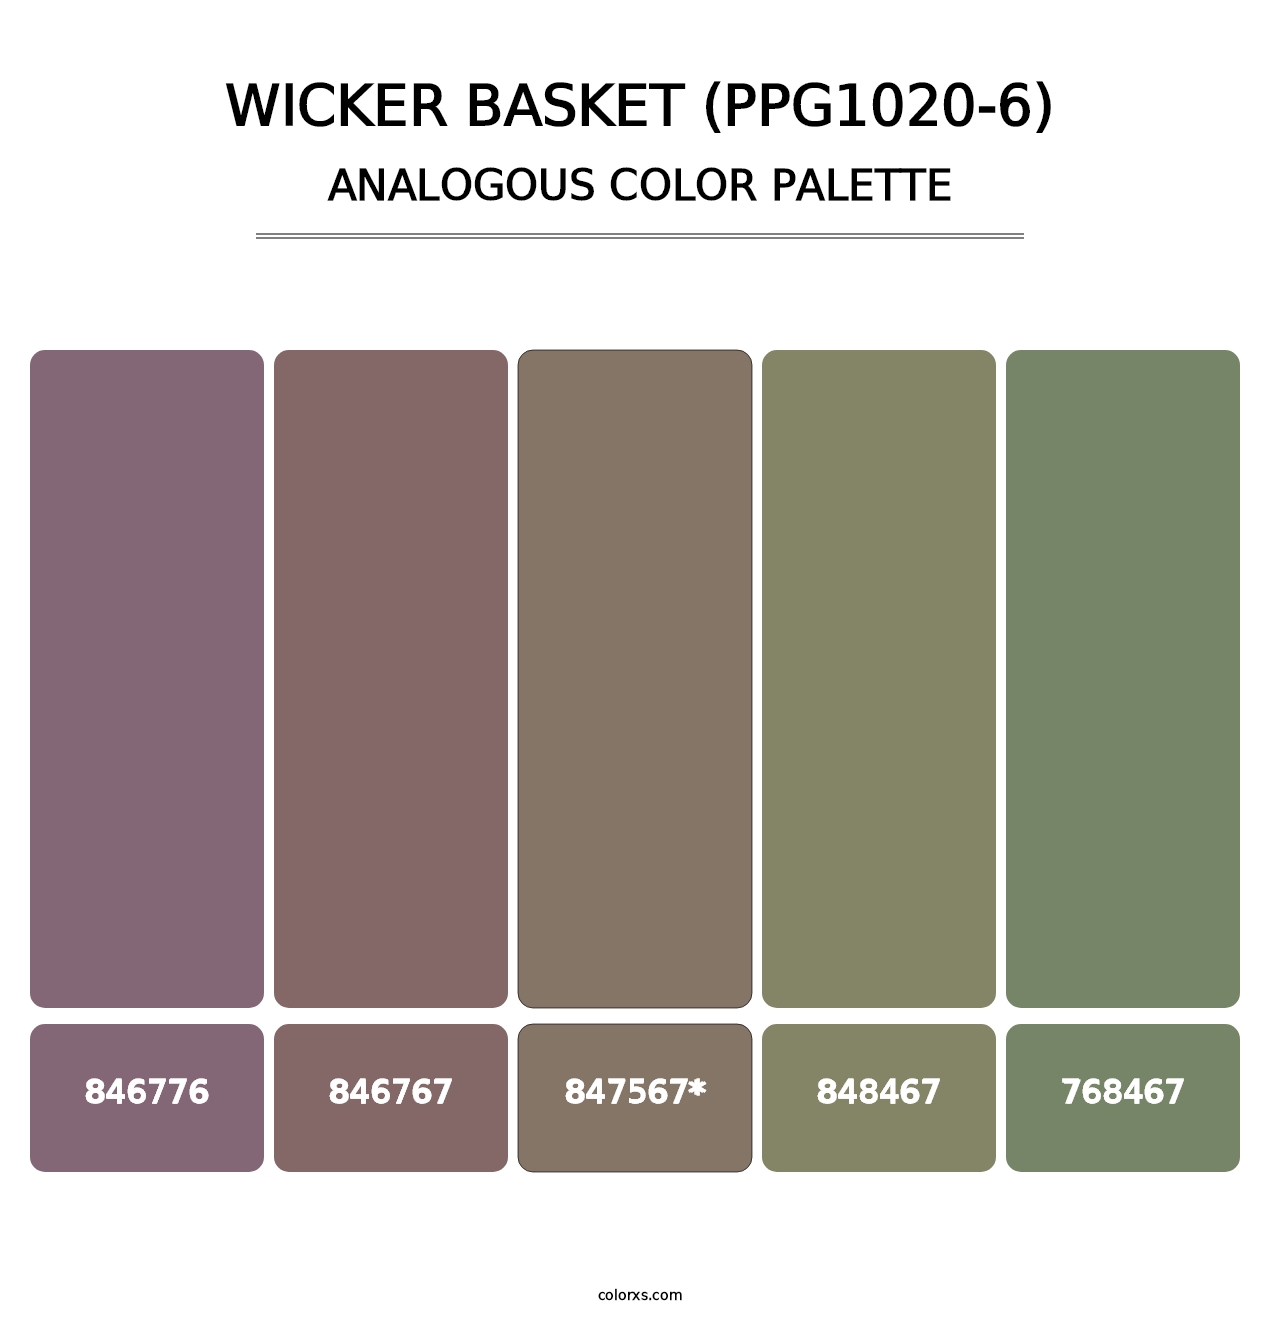 Wicker Basket (PPG1020-6) - Analogous Color Palette